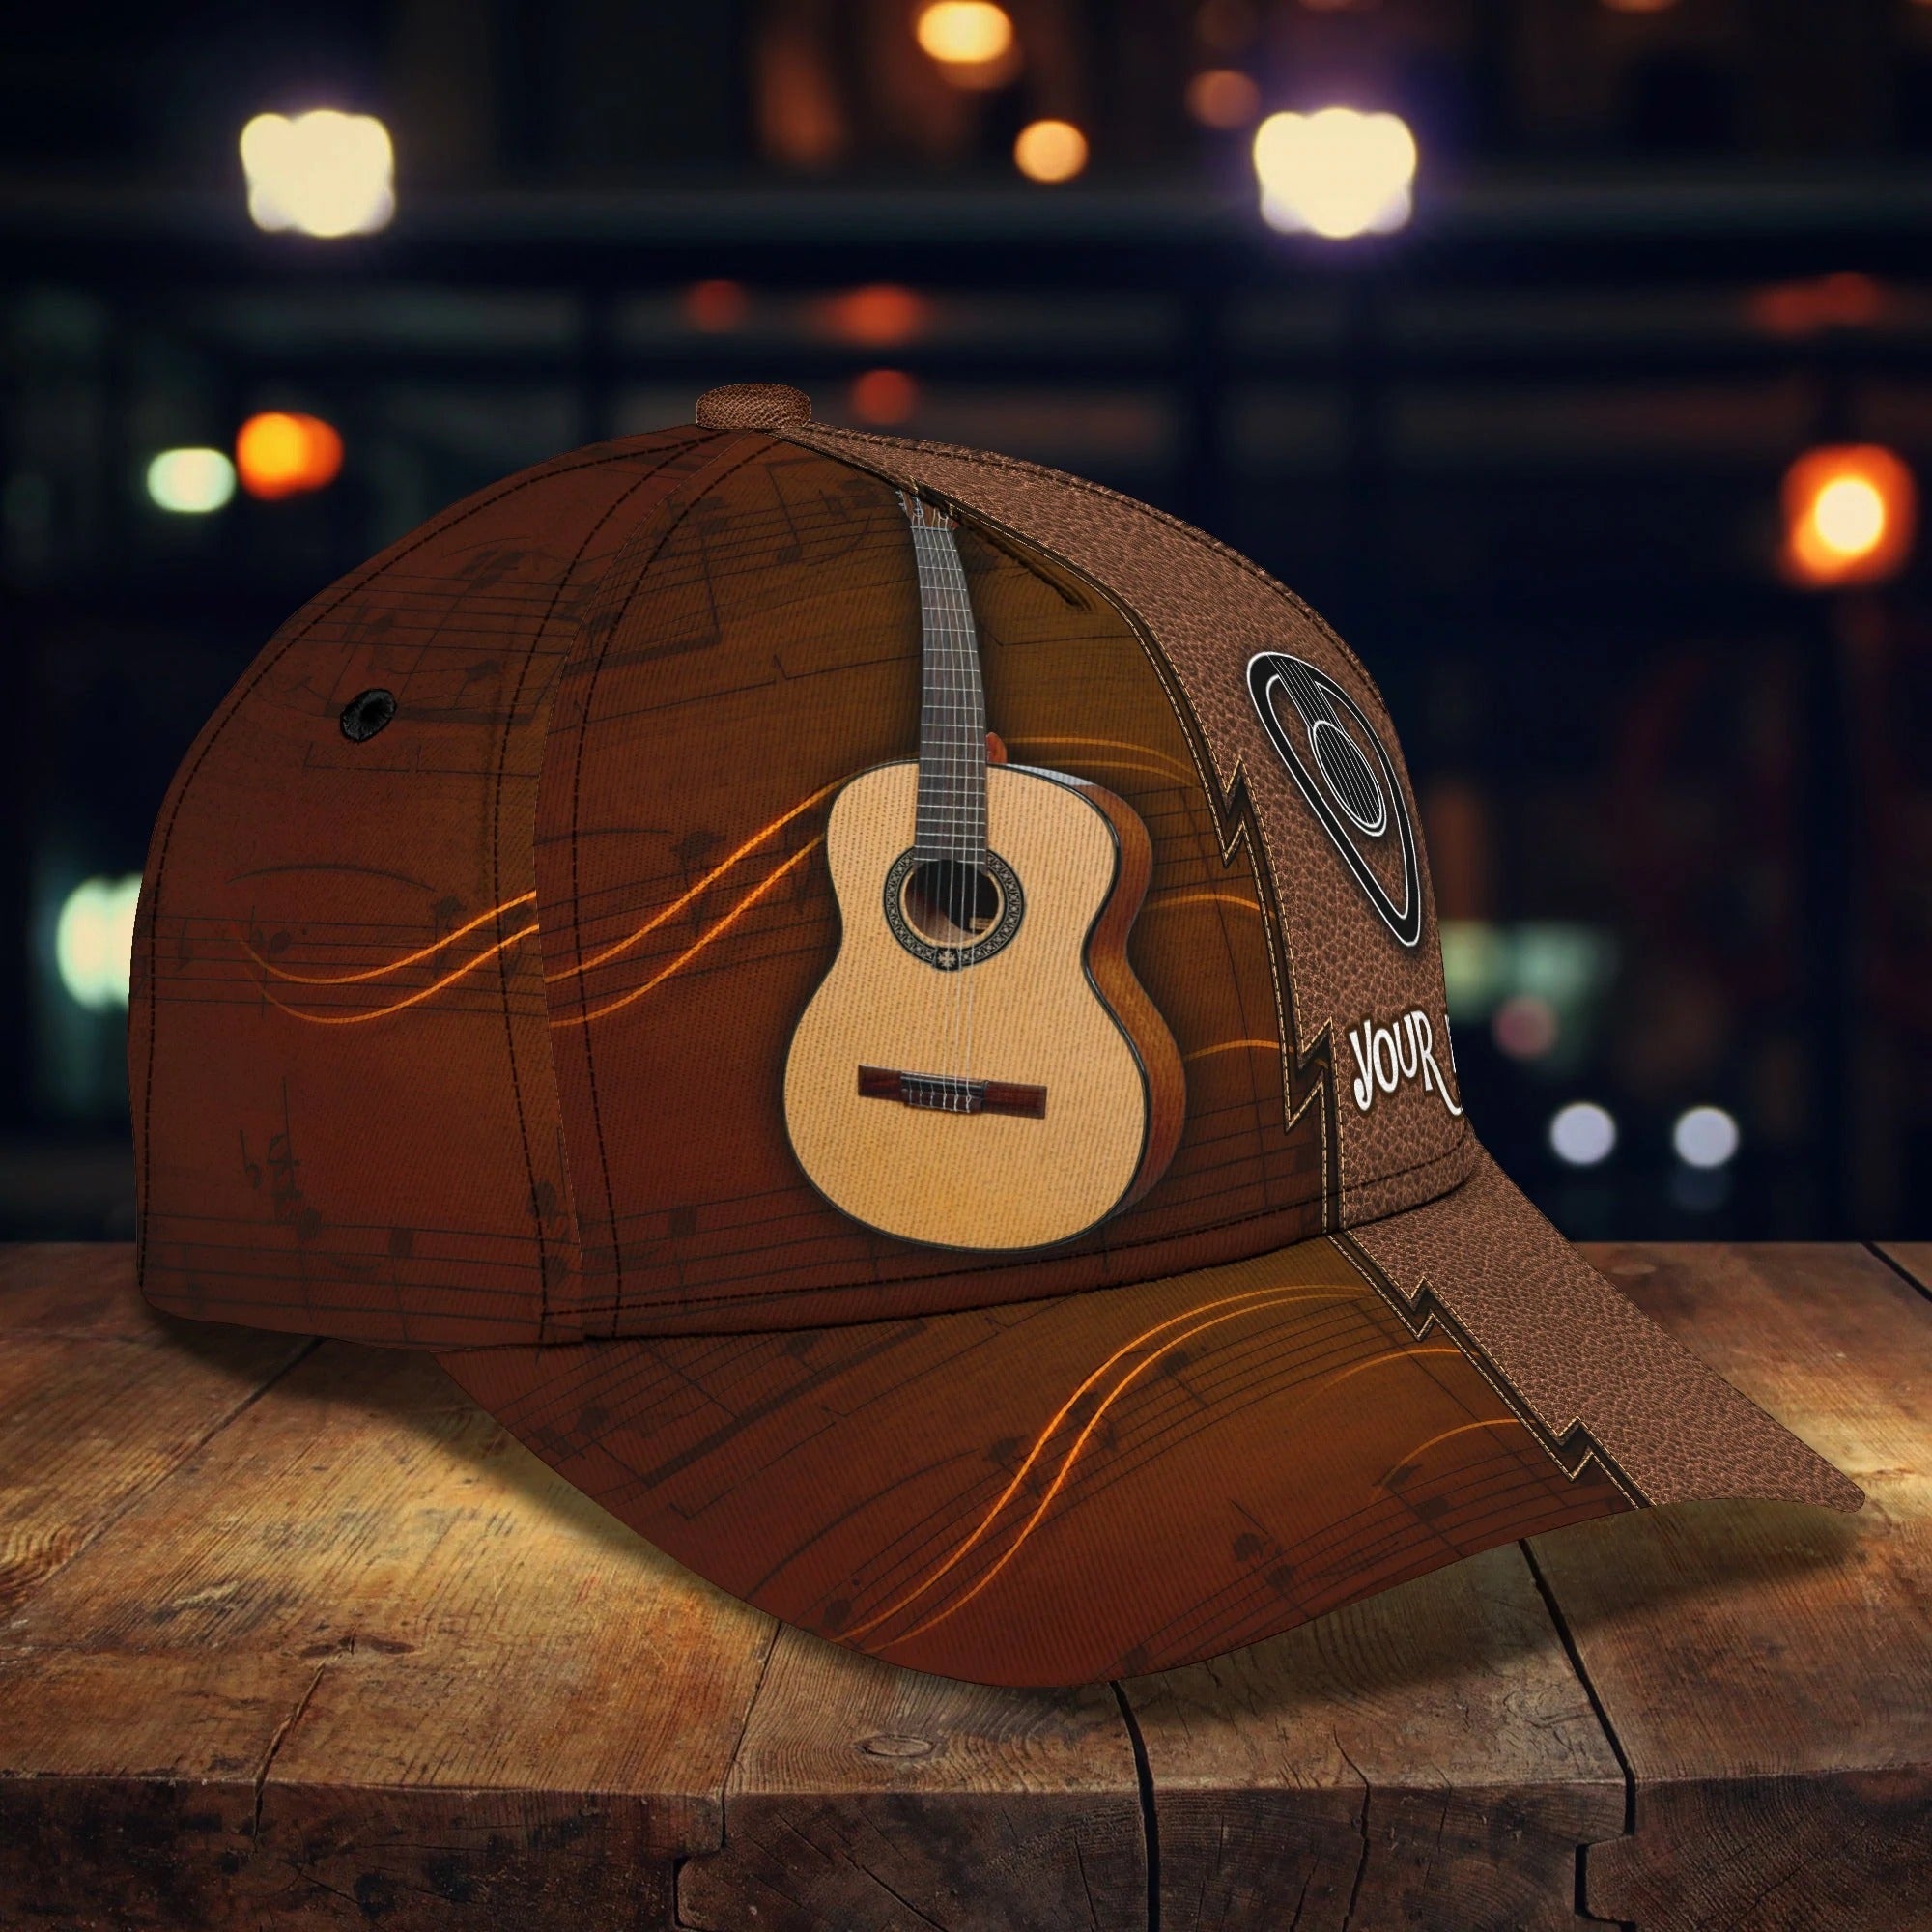 Custom Name Funny Gift For Guitar Man/ Guitarist Baseball 3D Cap/ Where World Fall Music Speak/ Musican Cap